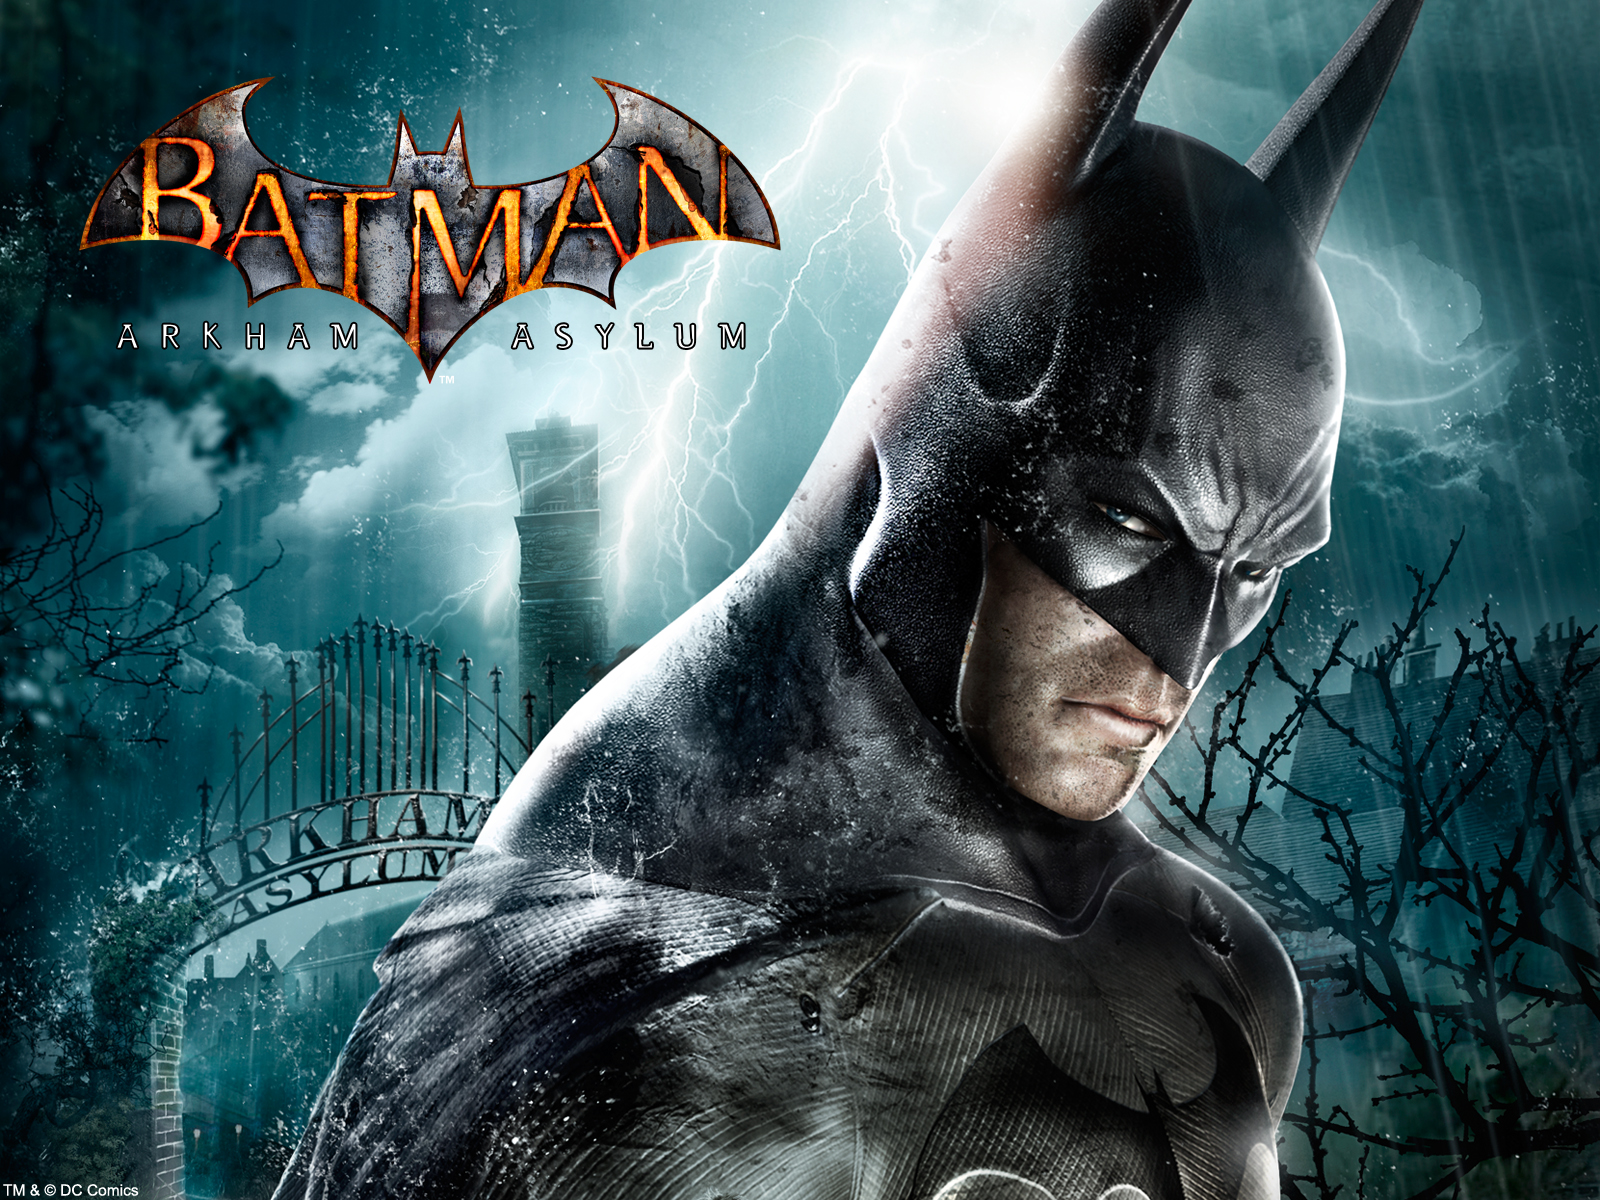 Batman Arkham City Asylum HD Wallpaper Video Game Desktop